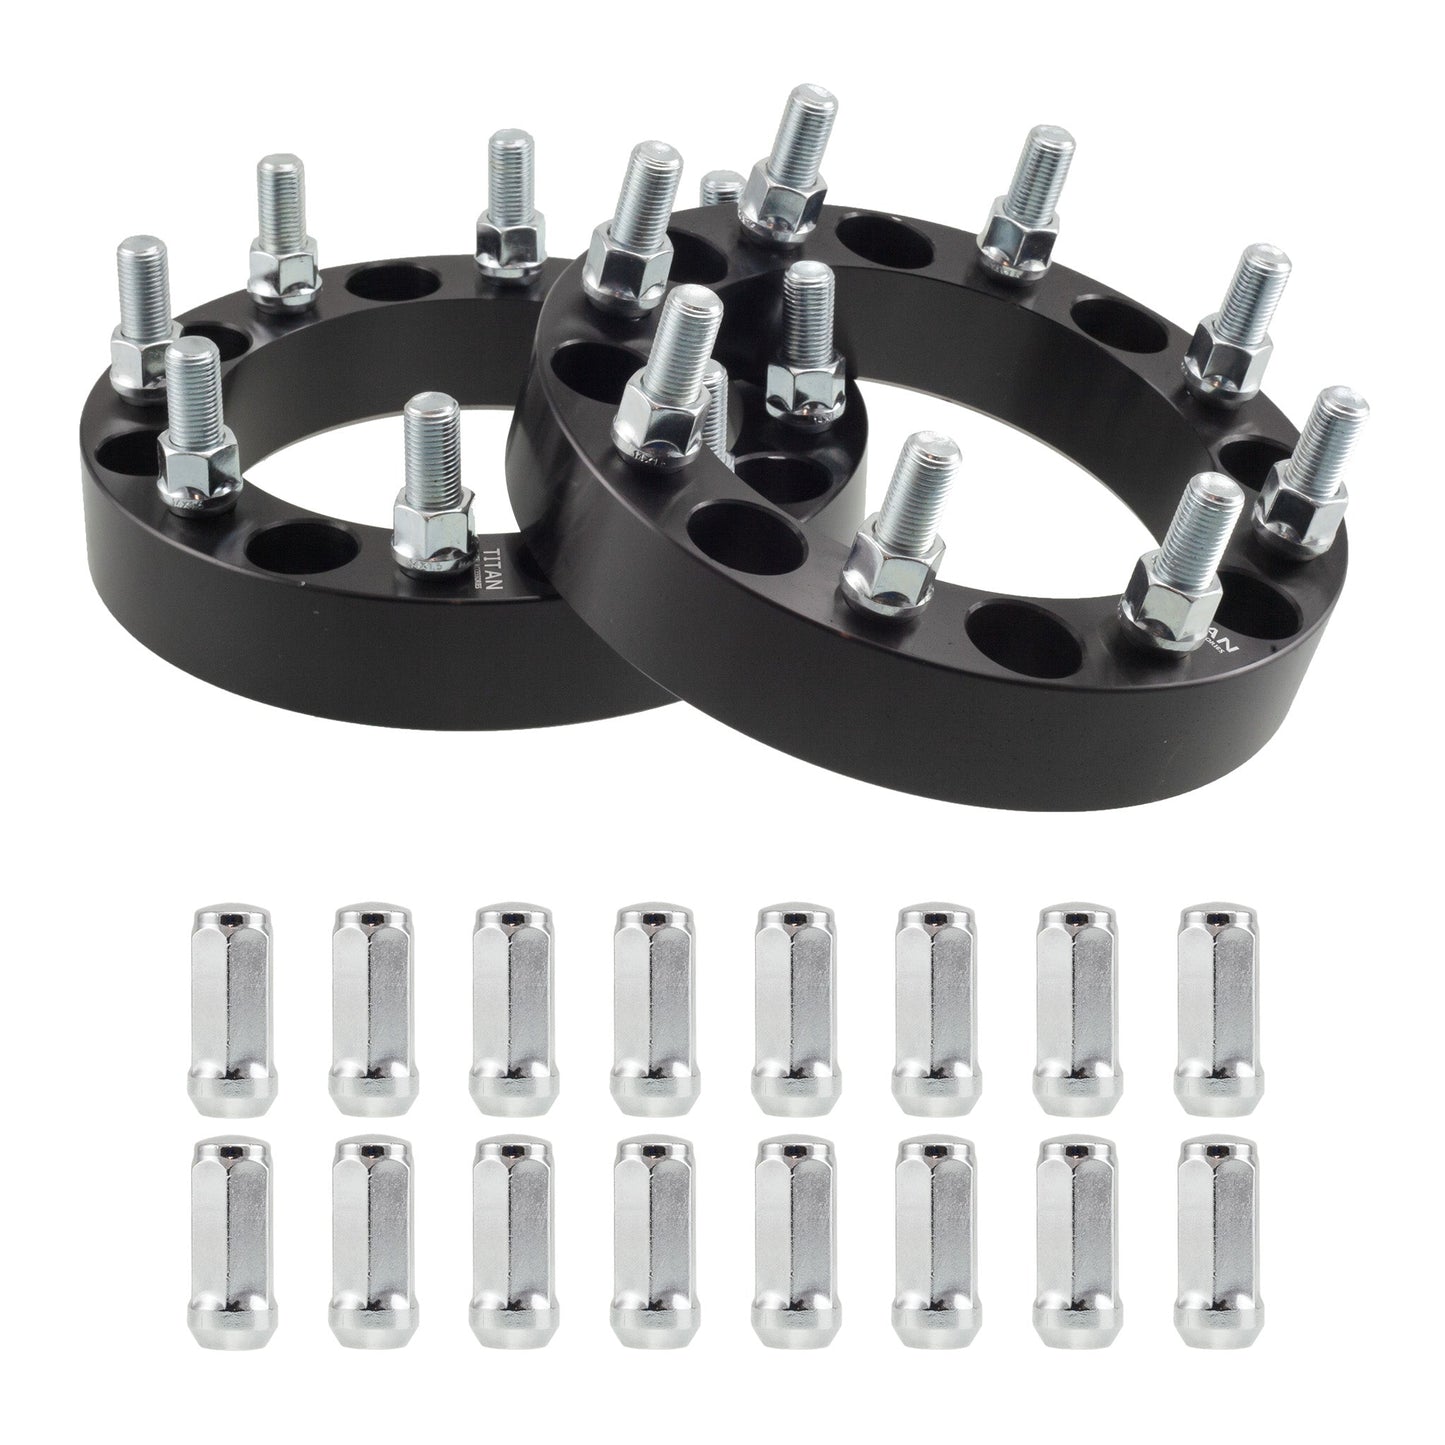 2.5" Titan Wheel Spacers for GMC Savana Sierra 2500 3500 | 8x6.5 | 14x1.5 Studs | Titan Wheel Accessories